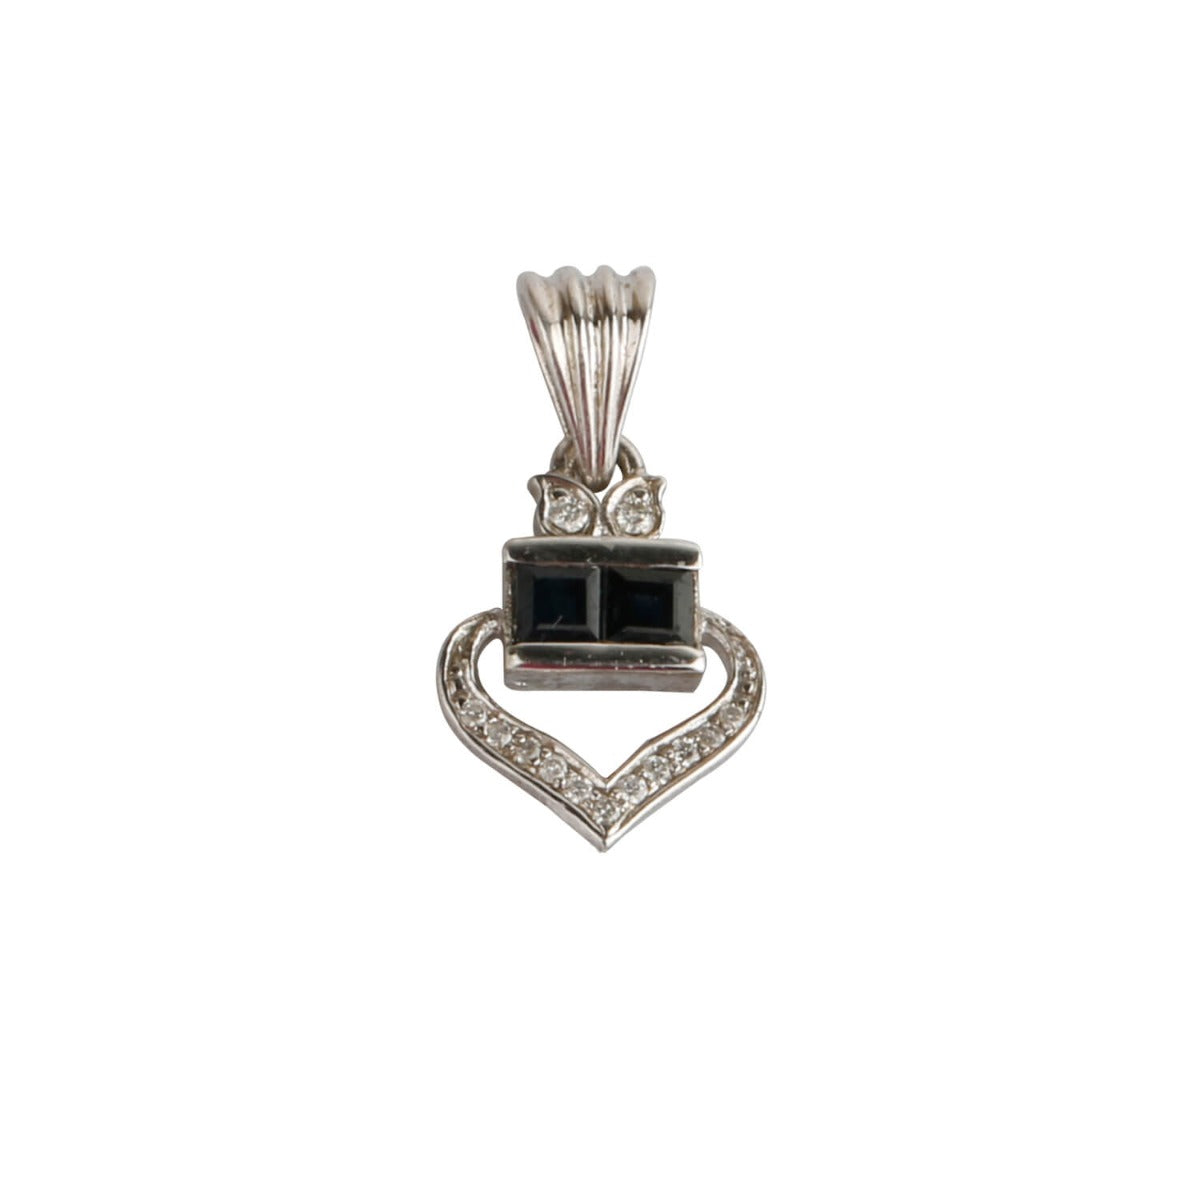  sterling silver pendant